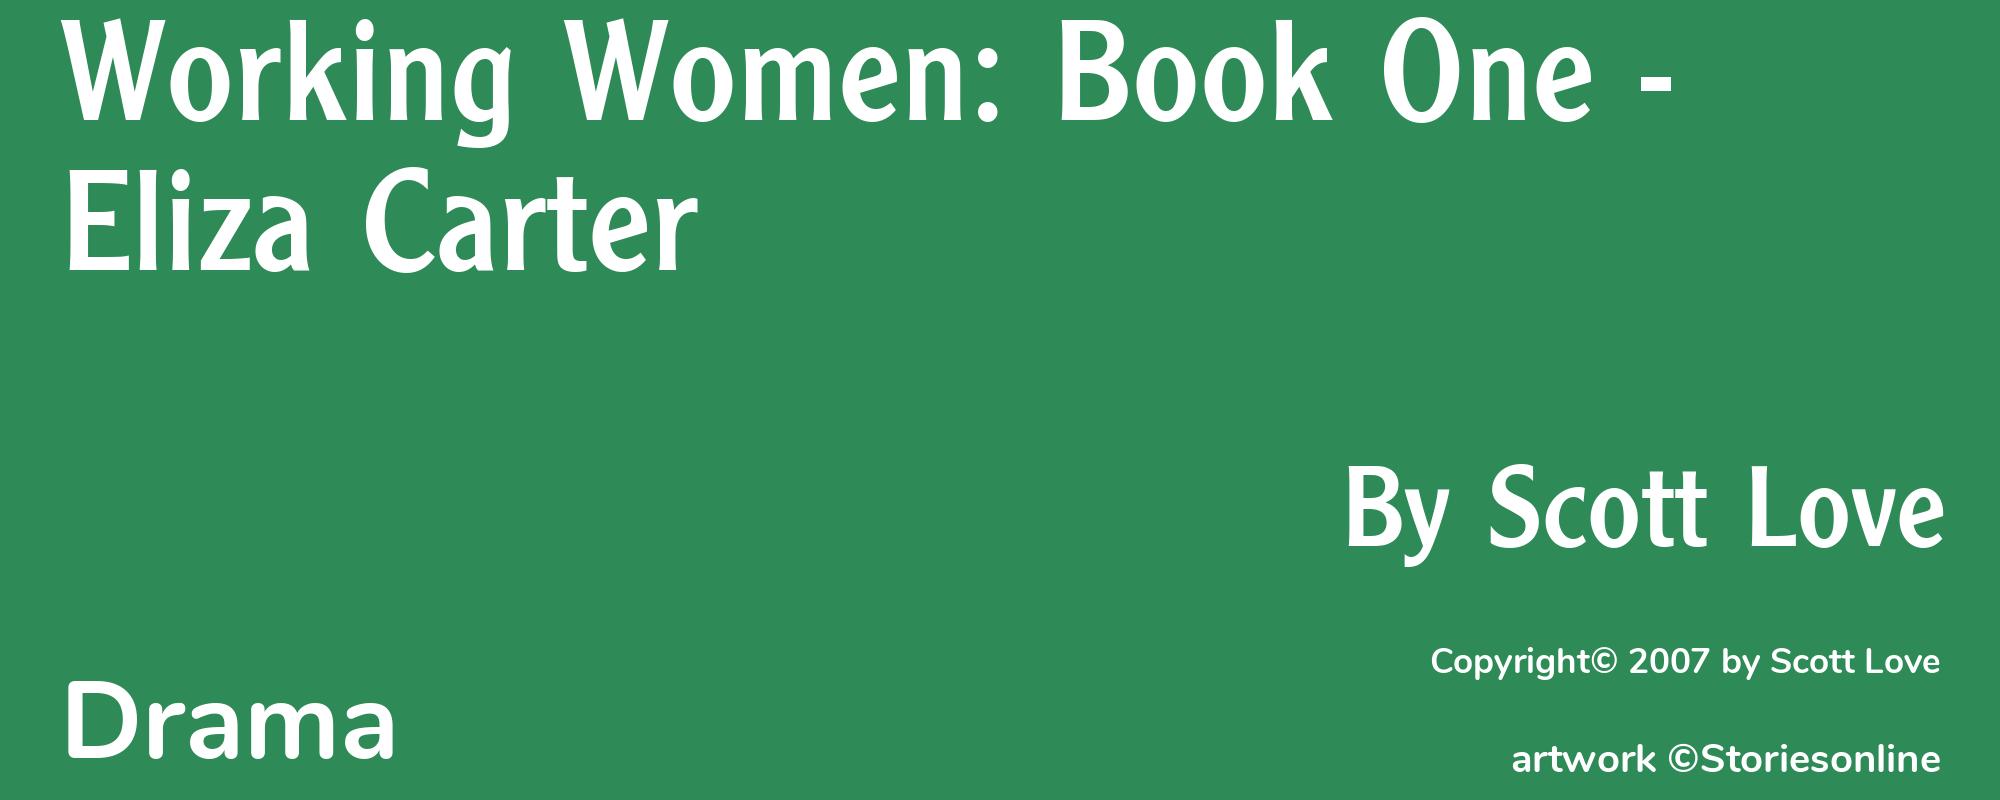 Working Women: Book One - Eliza Carter - Cover